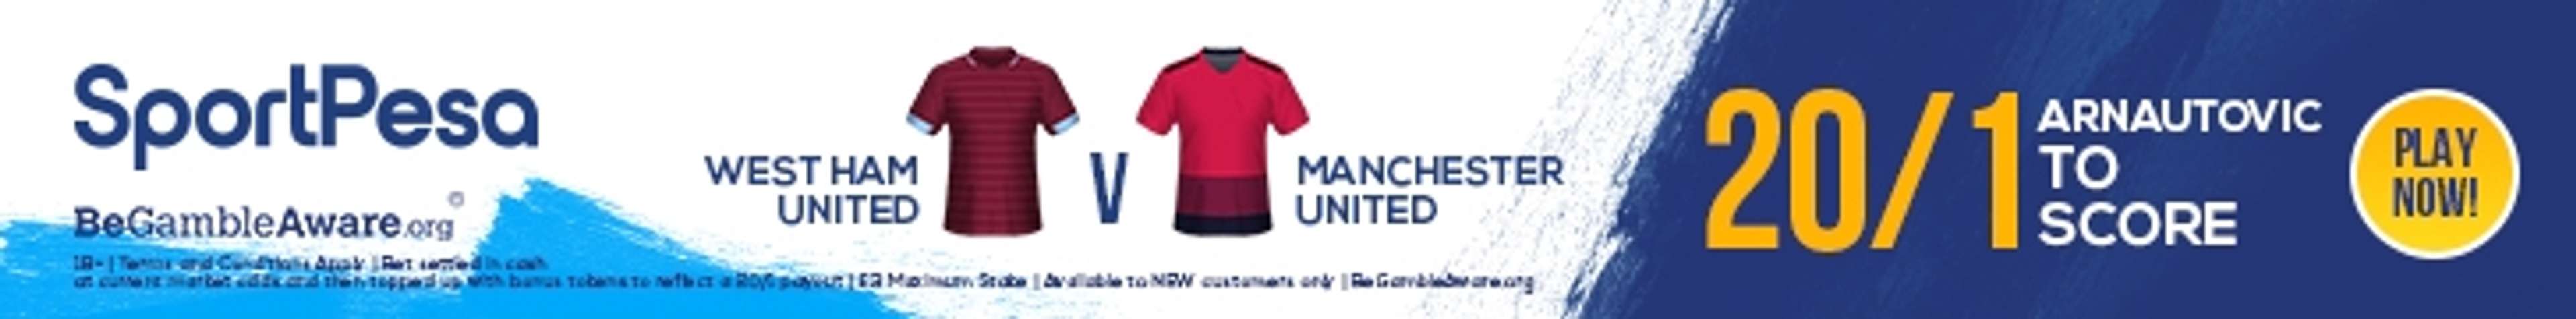 West Ham Manchester United Arnautovic offer